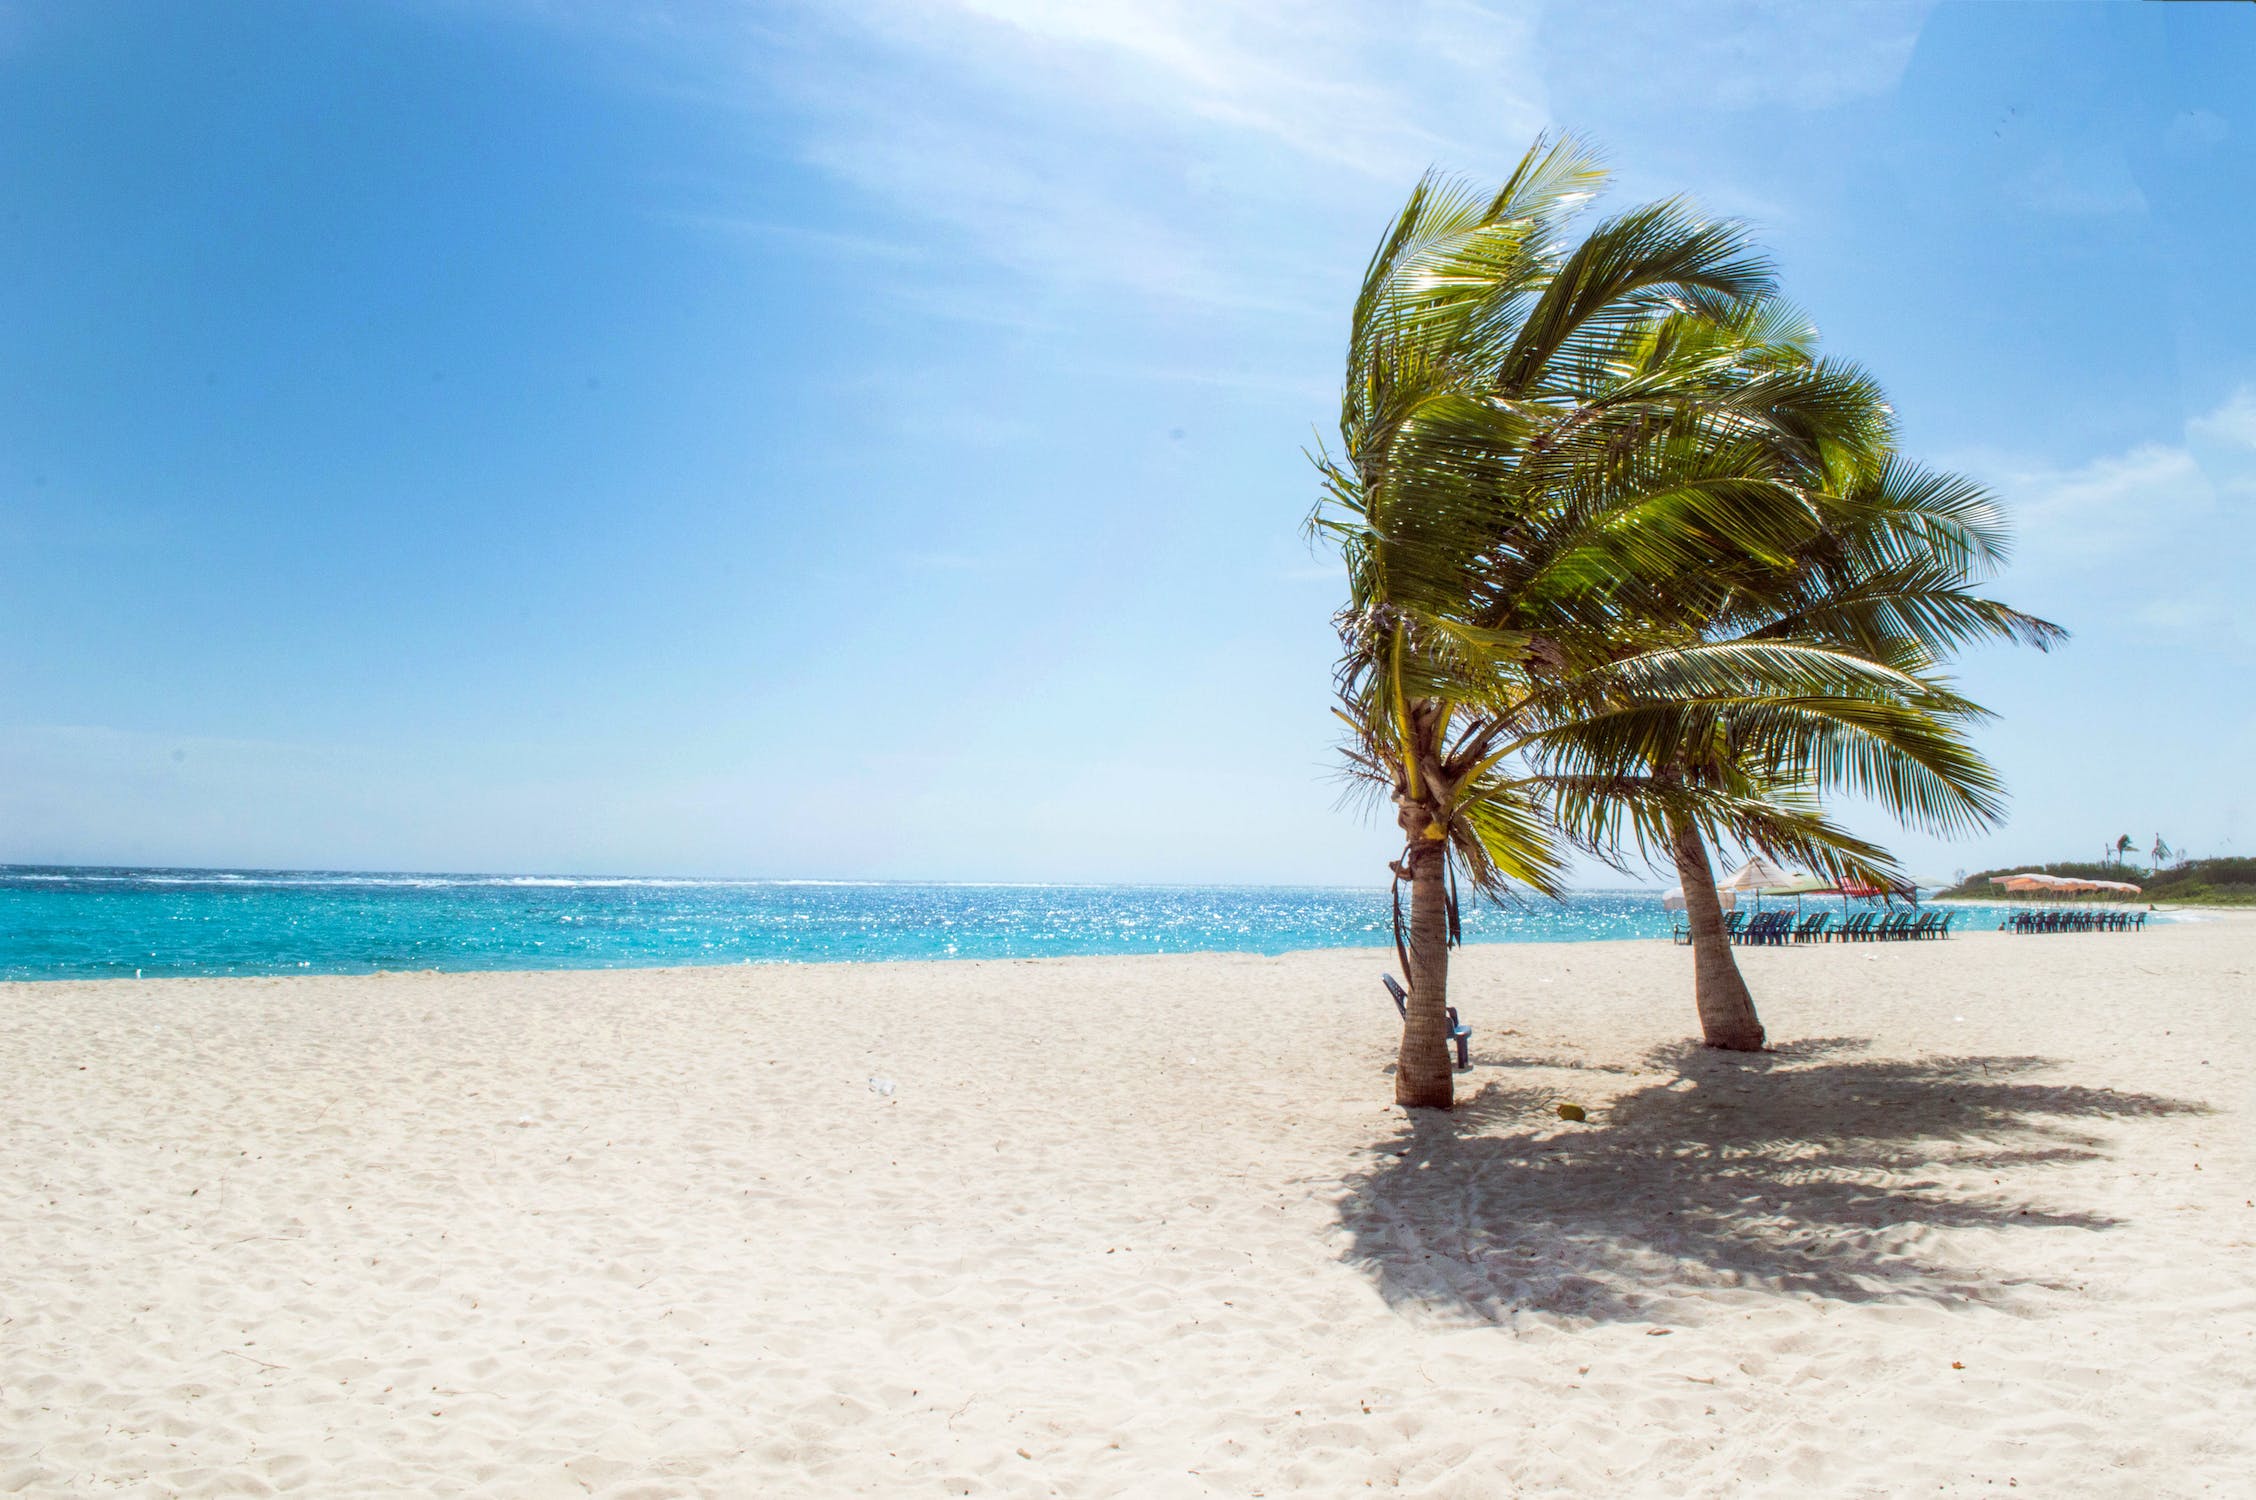 Los clubs de playa imperdibles de Punta Cana